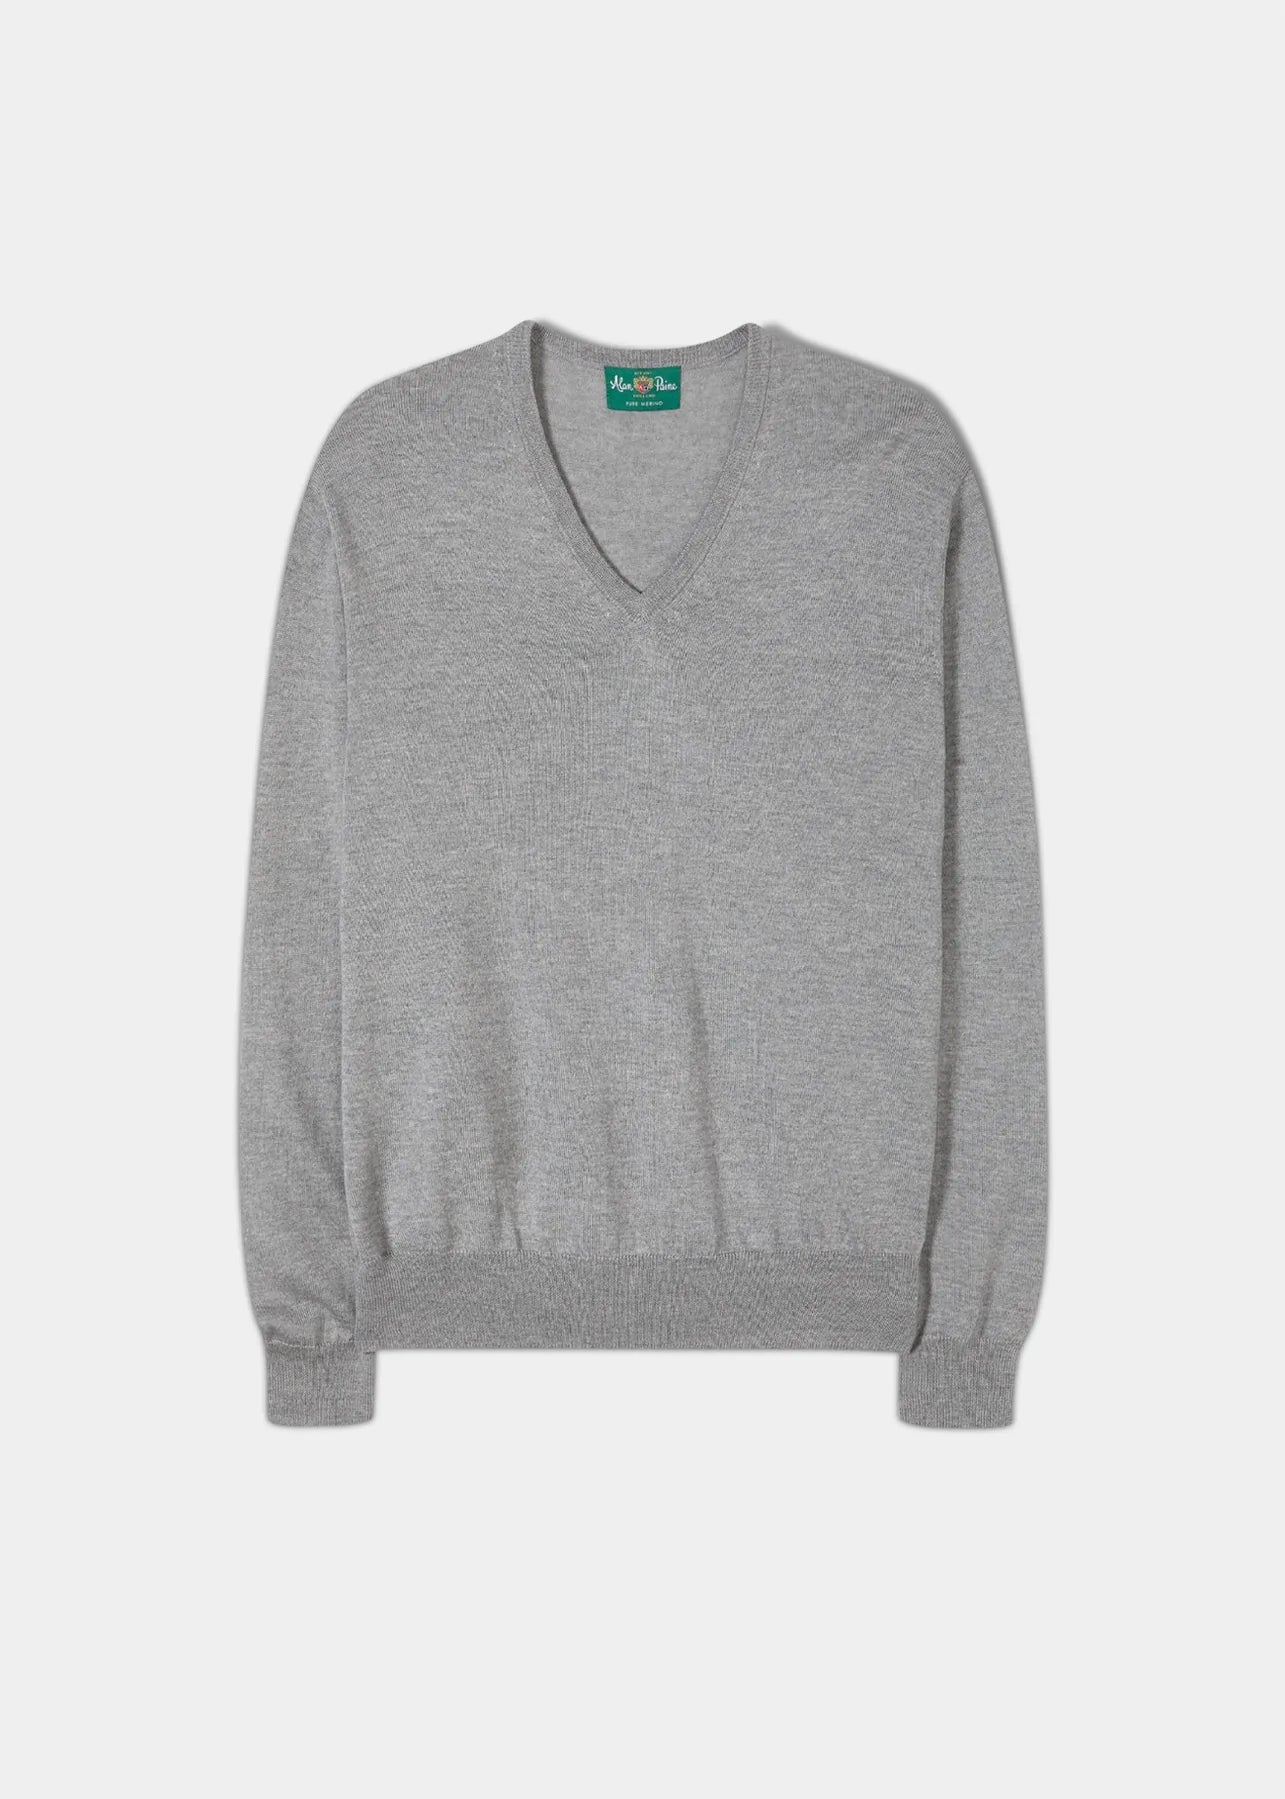 Millbreck Merino Wool Sweater for Men